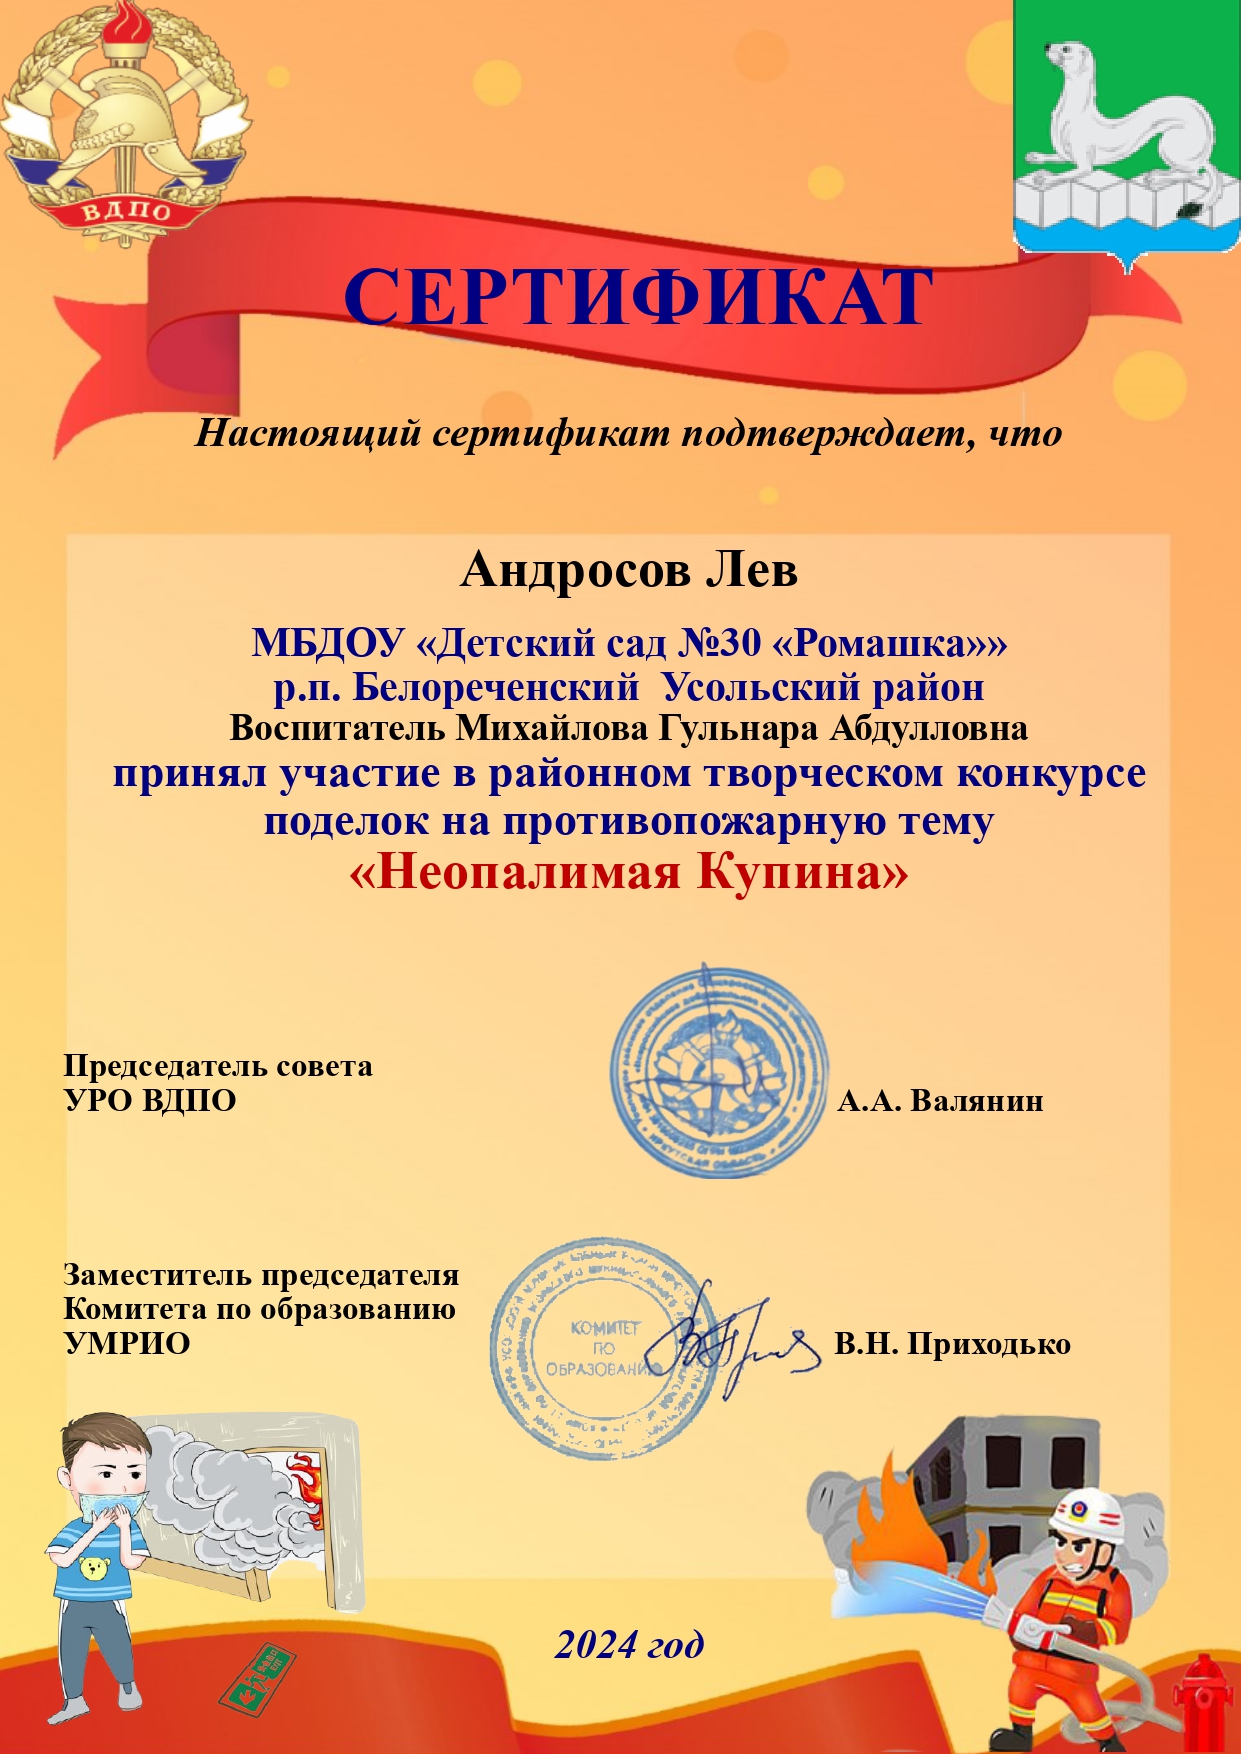 Сертификат поделки Андросов Лев д.сад 30 page 0001